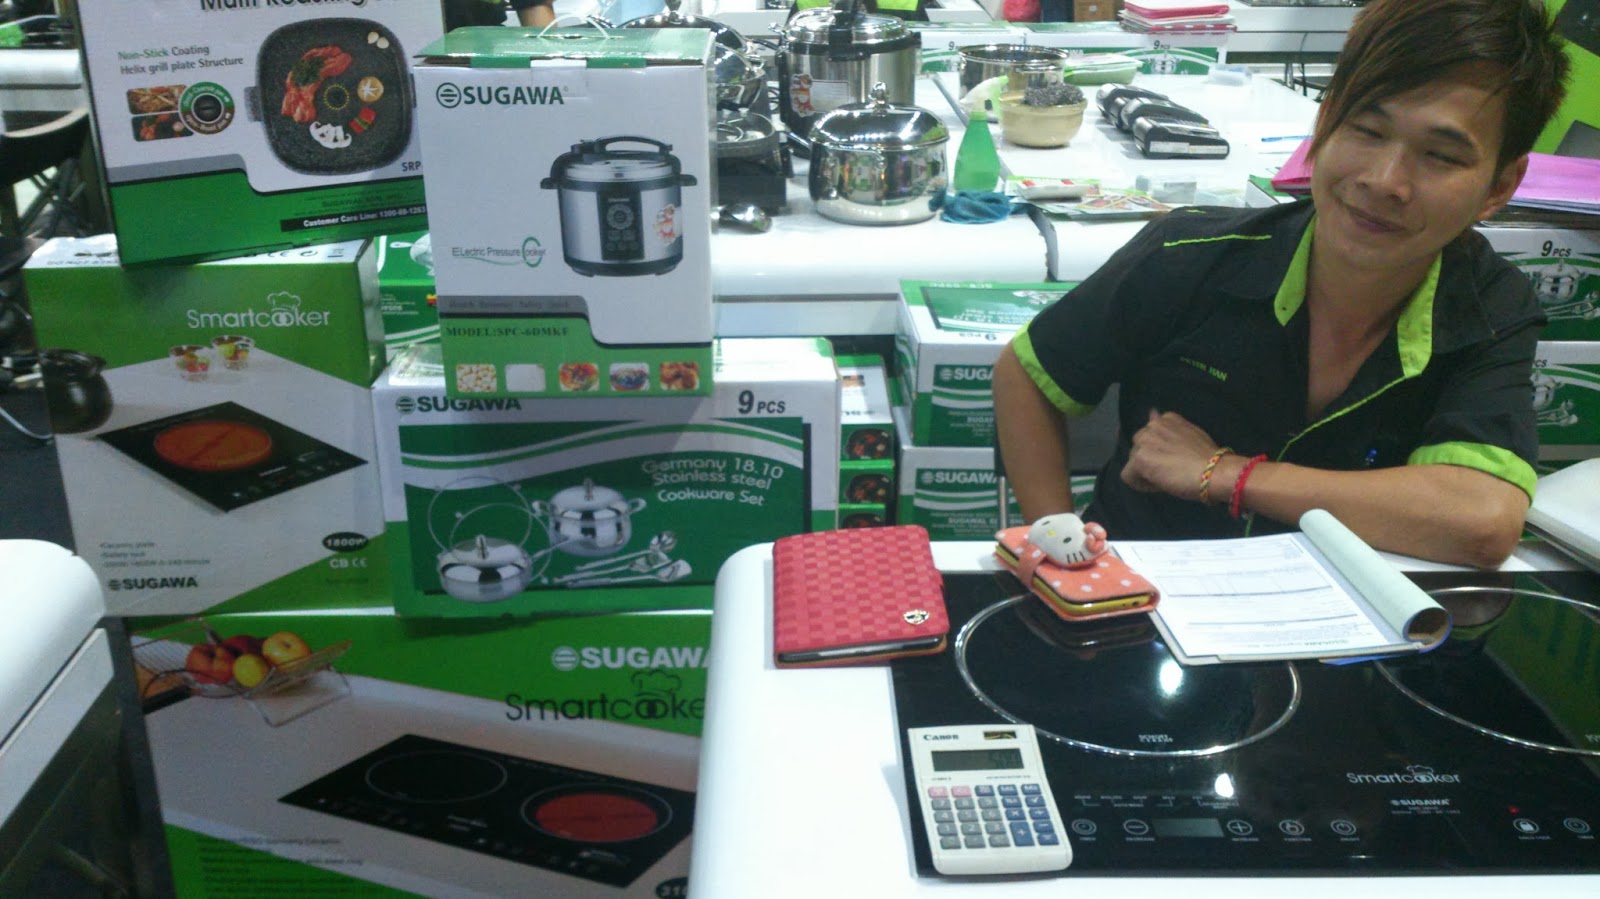 Sugawa smart cooker promotion – Dishwashing service